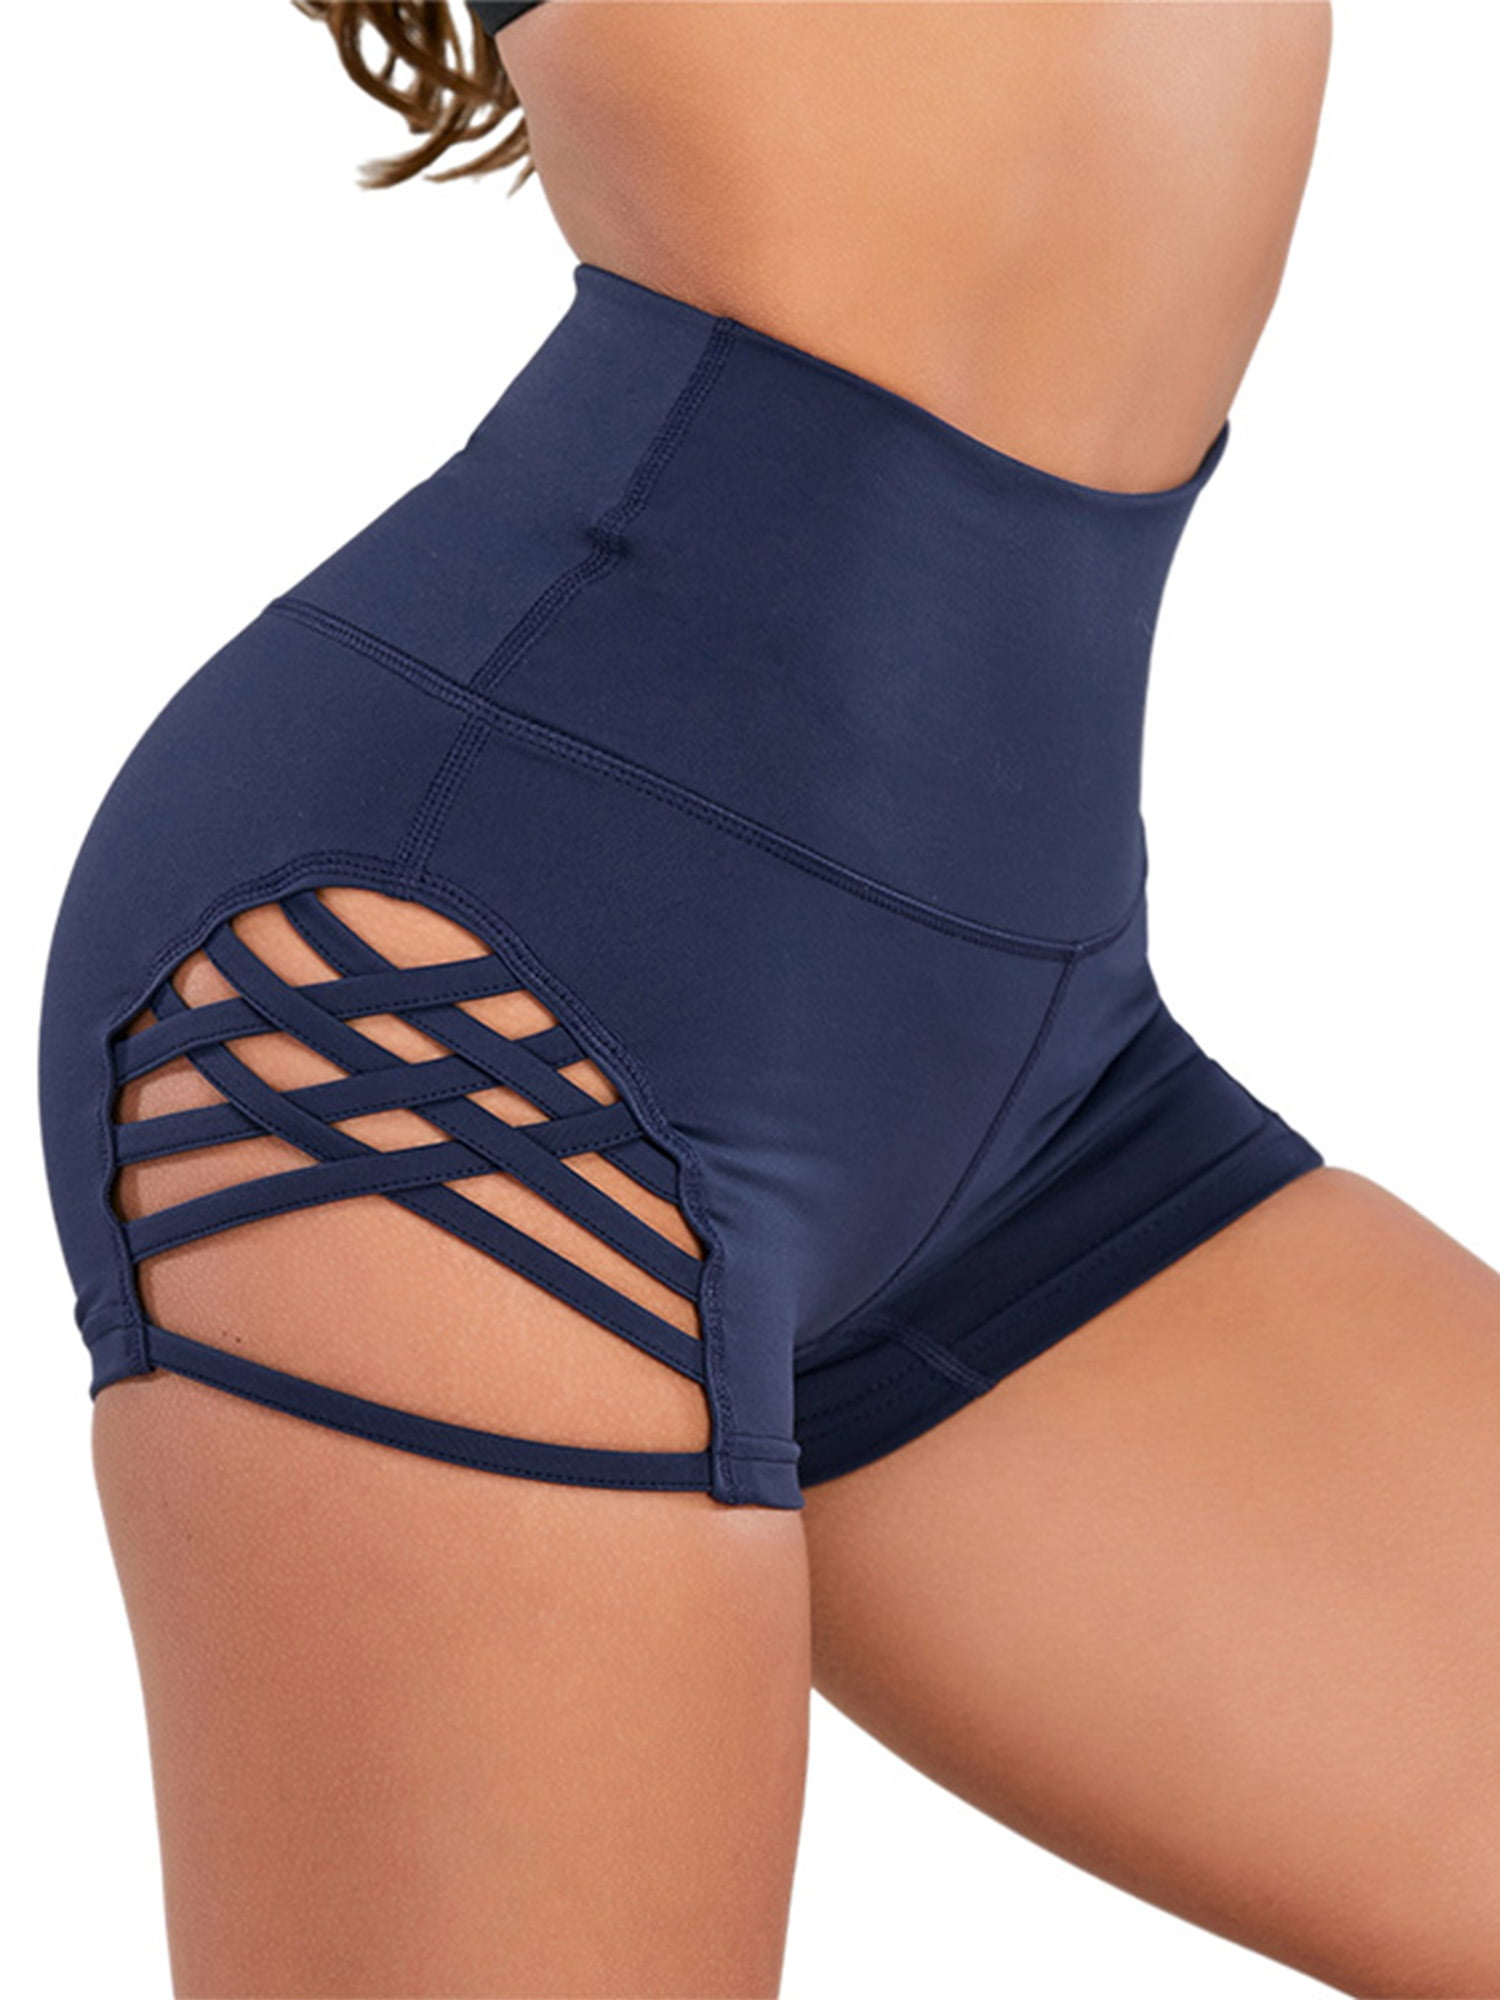 Womens Hand Made Cotton Lycra Blue Flower Hot Pants Shorts Gym Sports Swim Yoga 